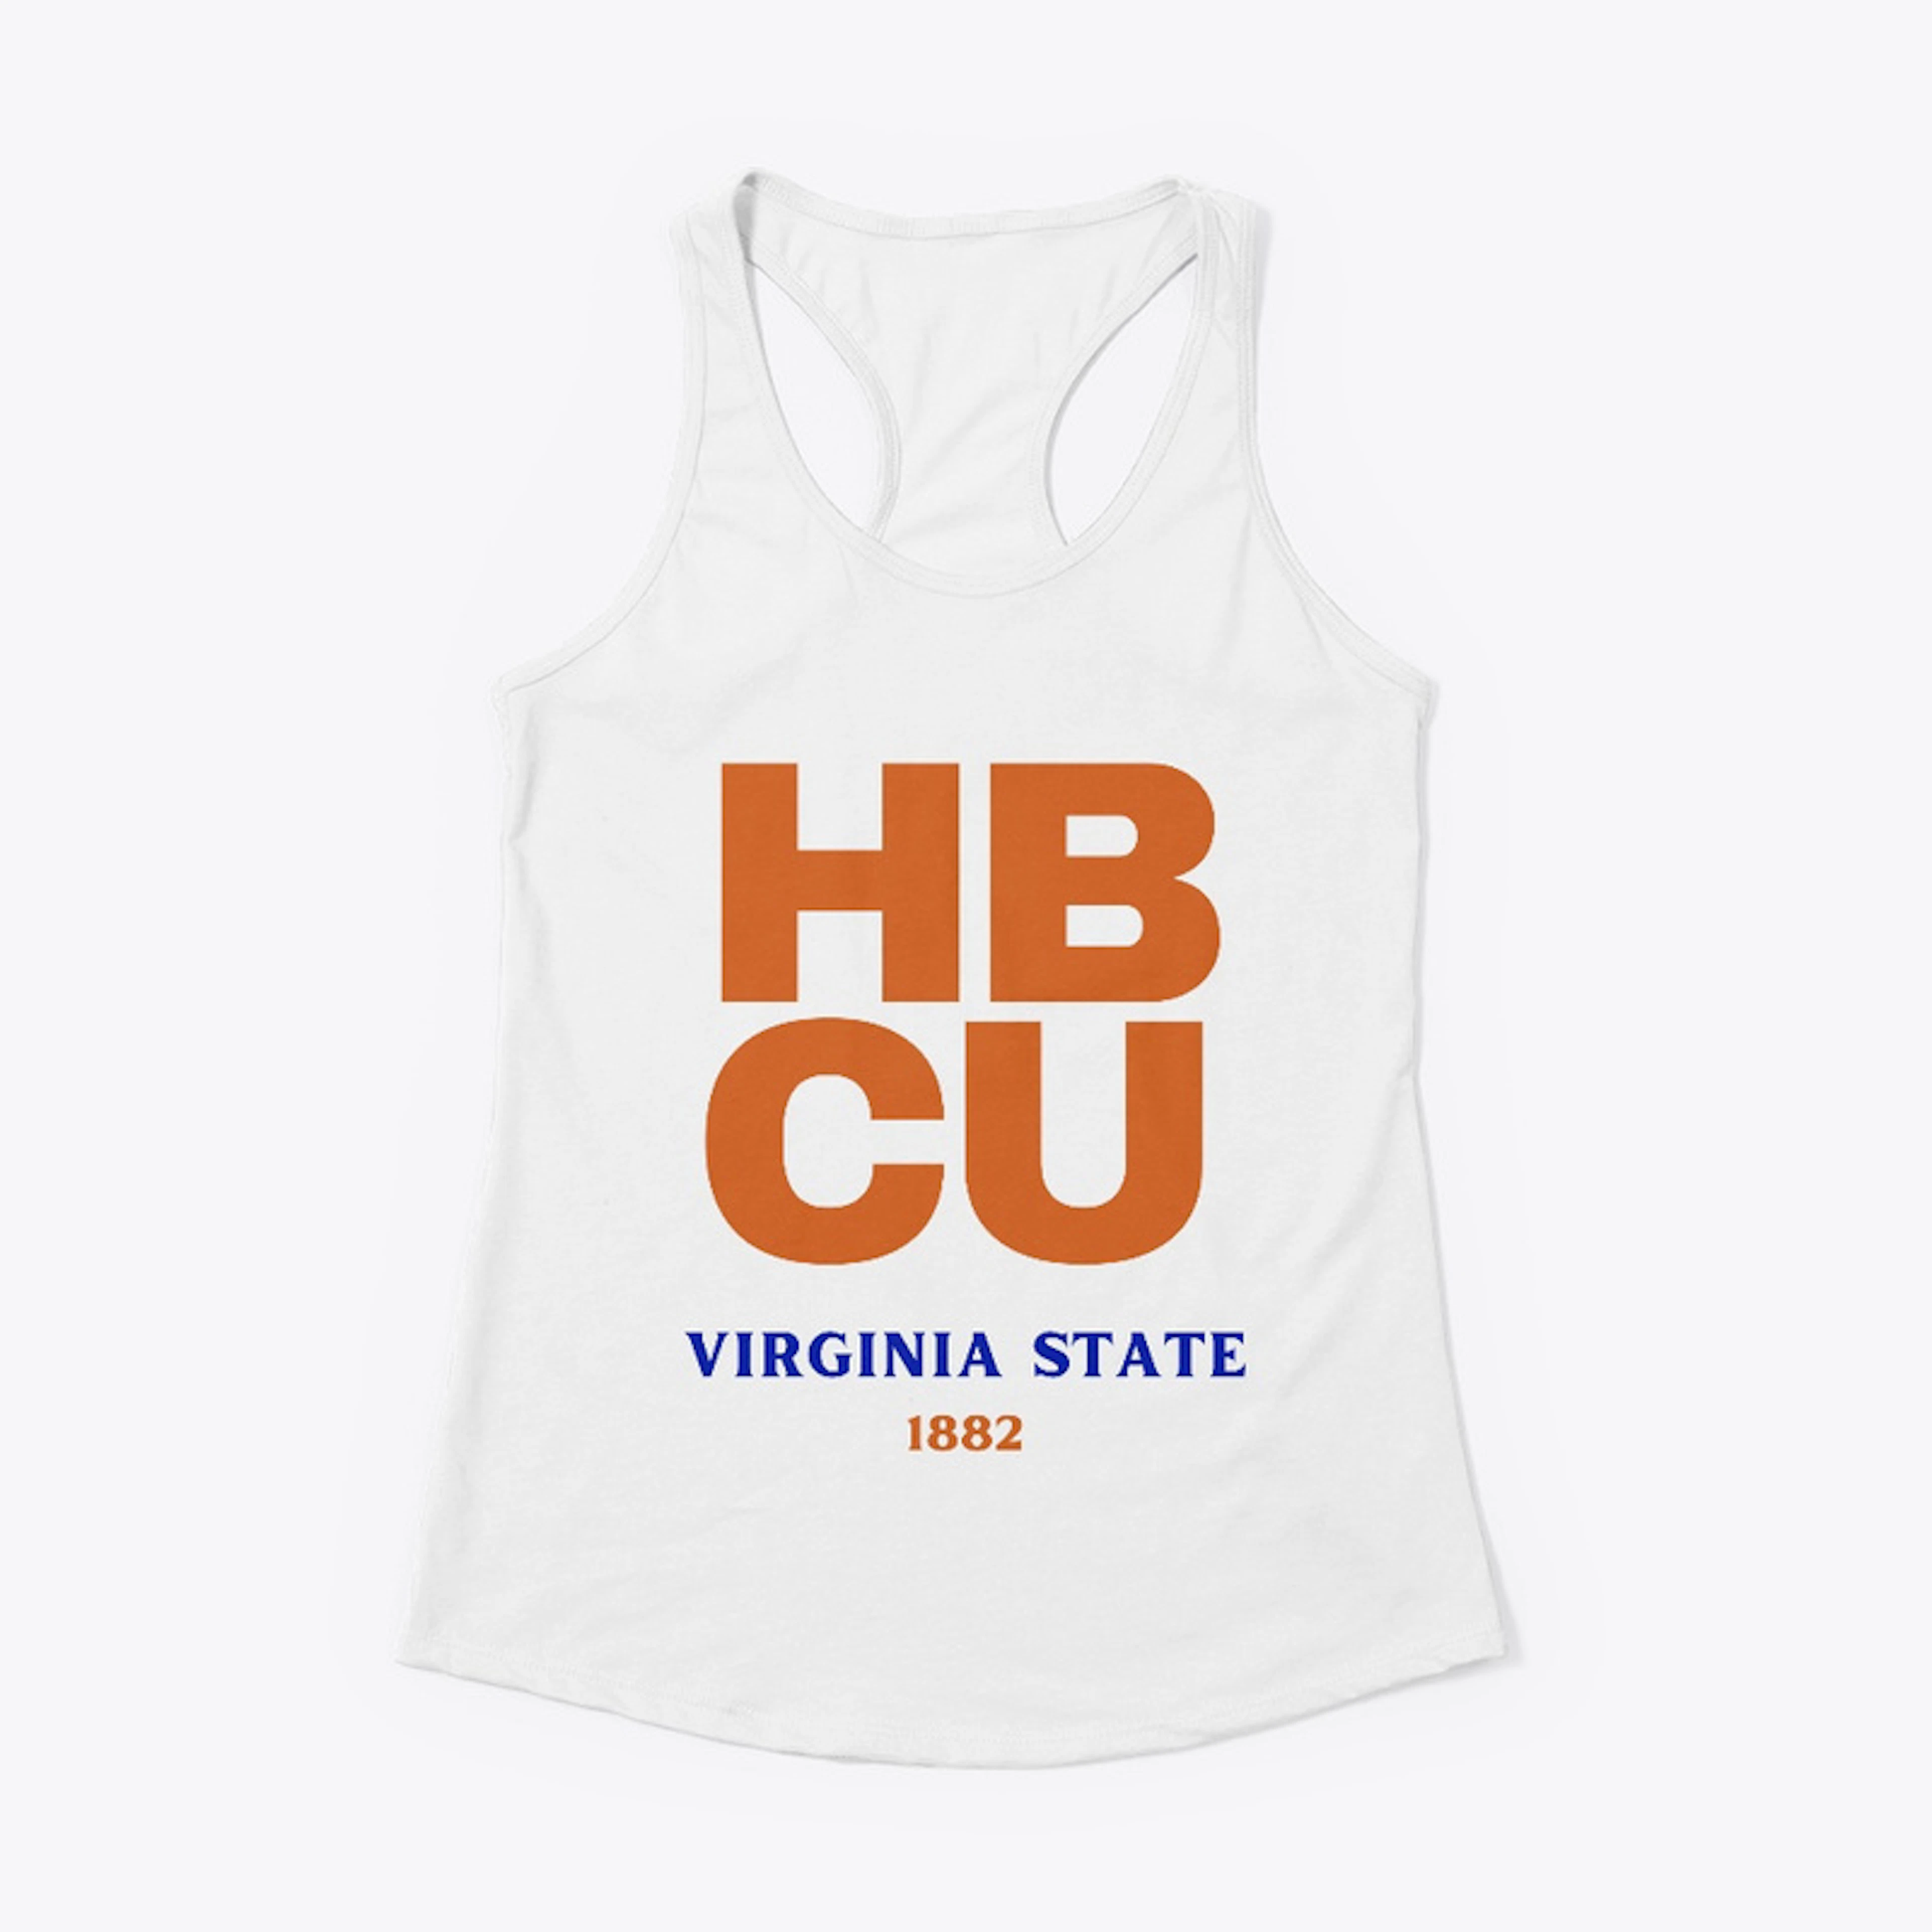 HBCU: Virginia State University